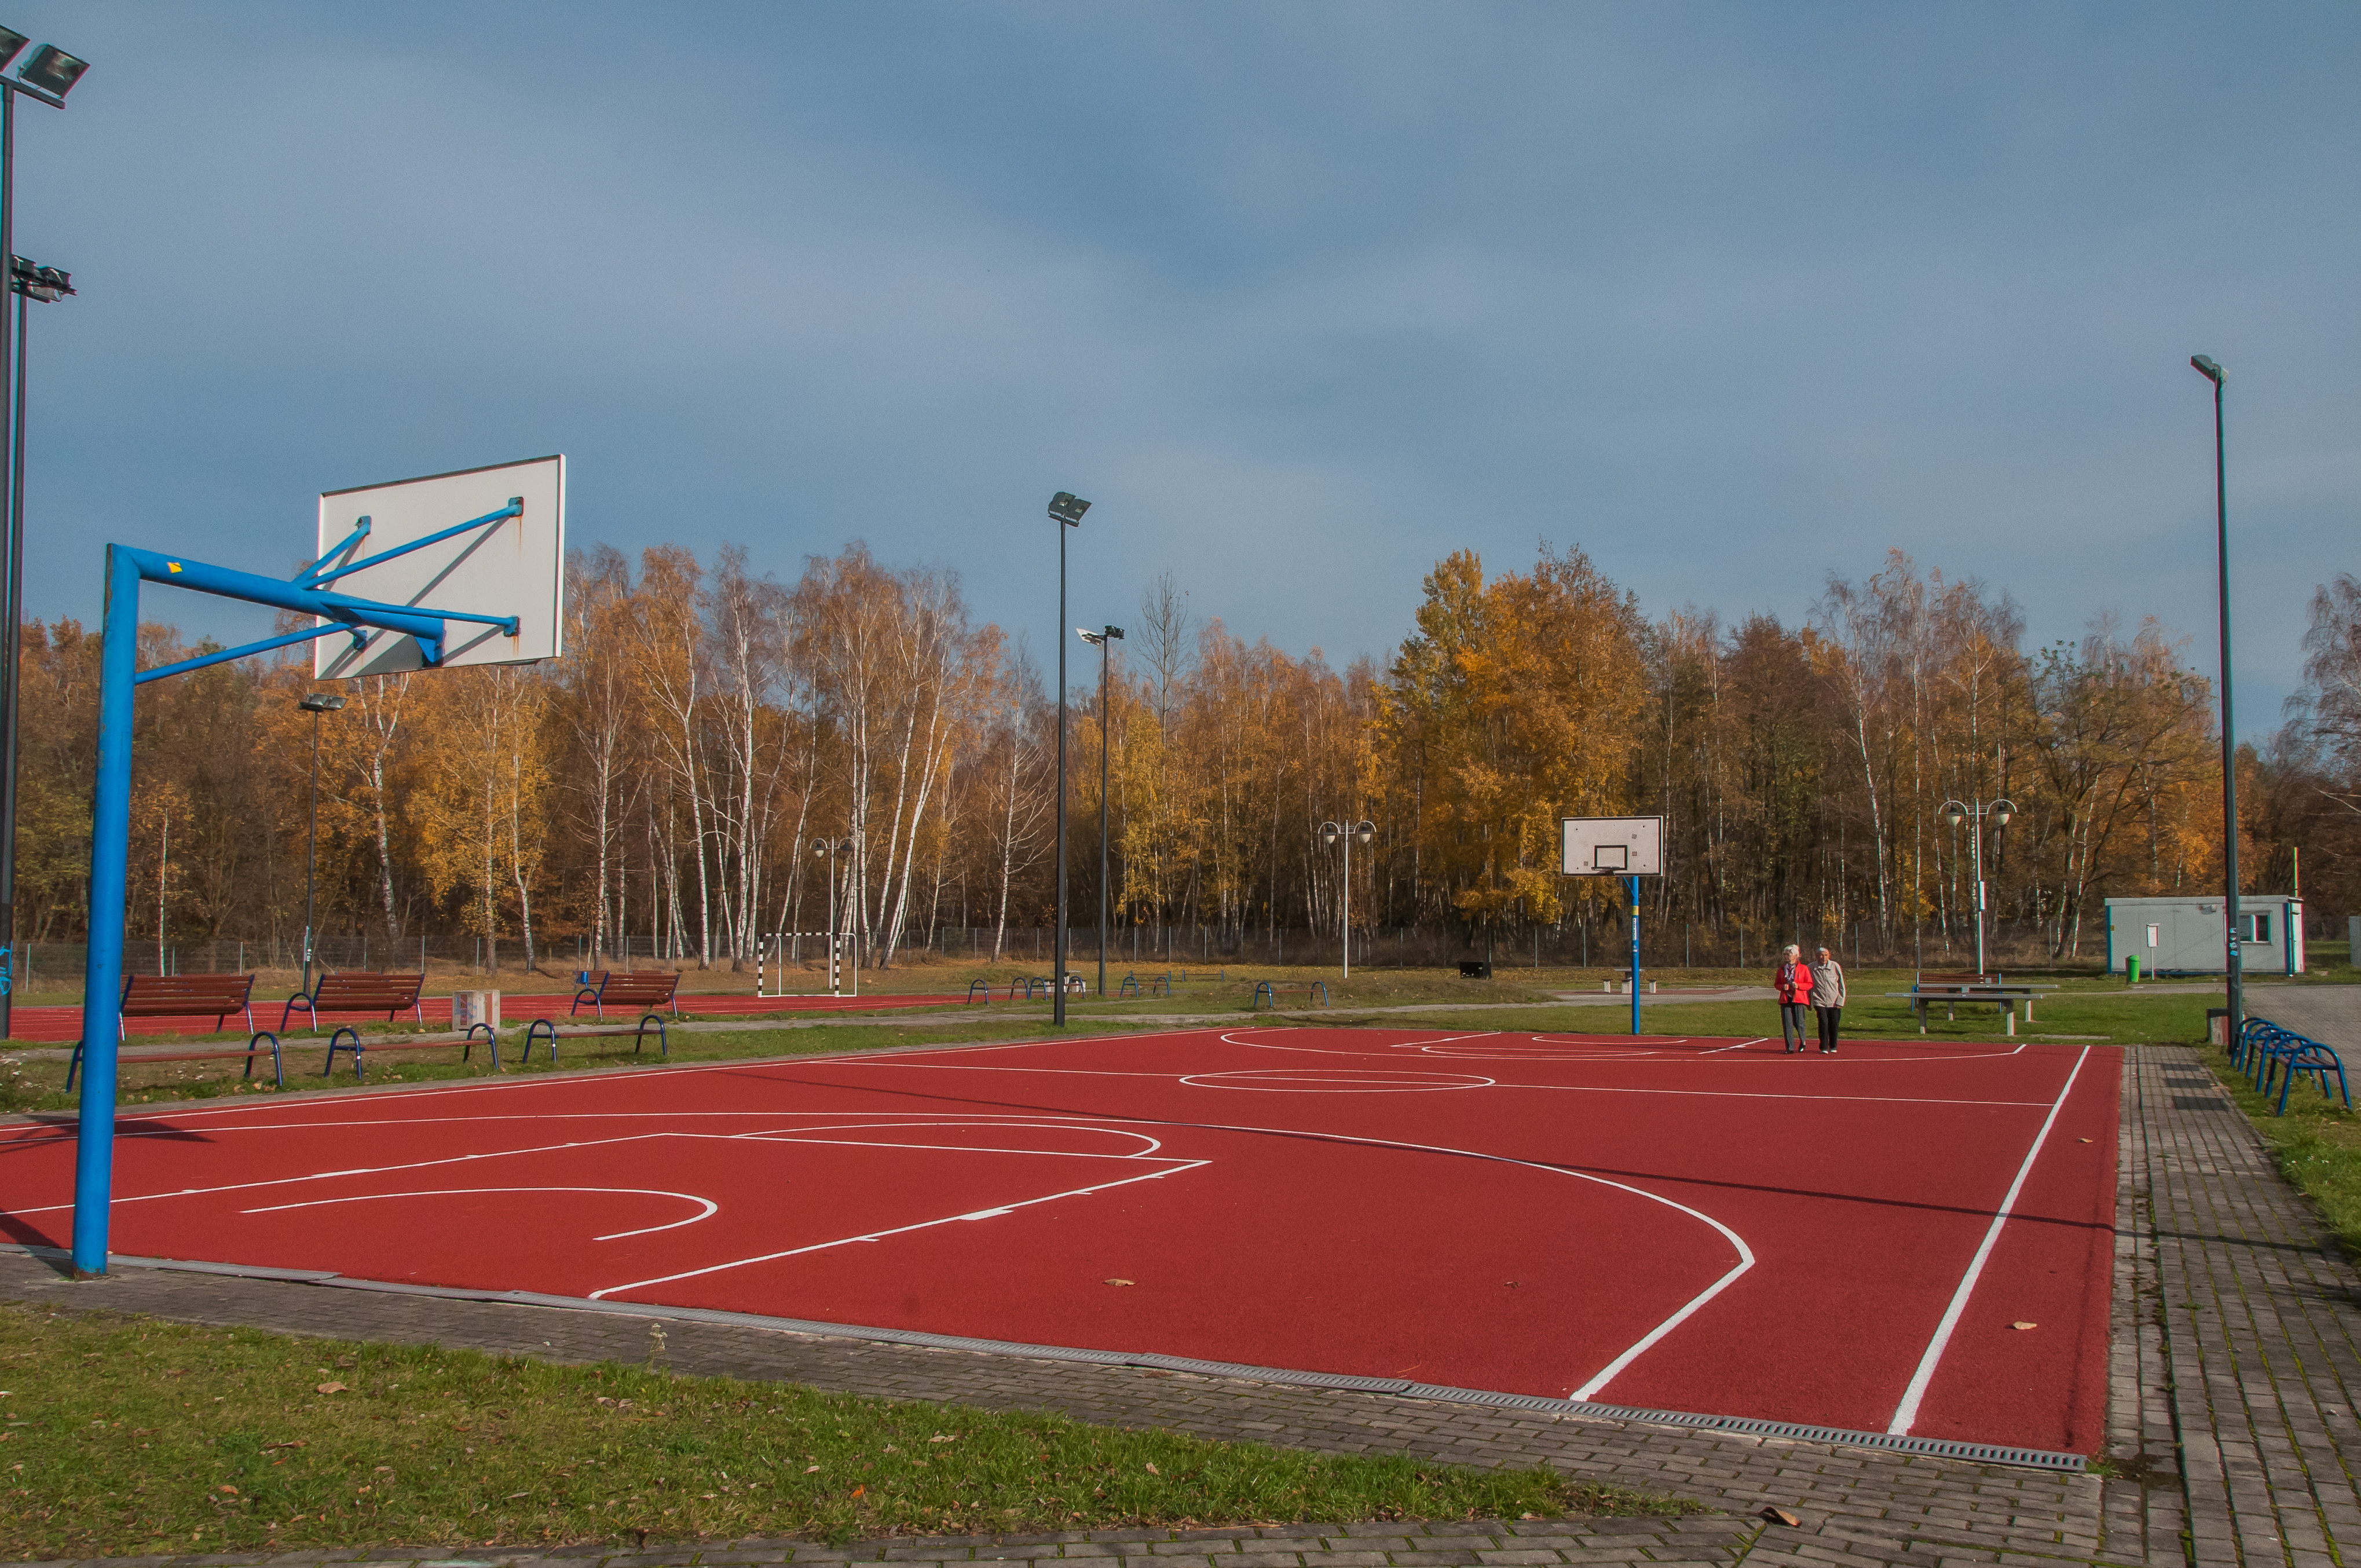 Piaskowa Dolina complex of multi-purpose sports fields